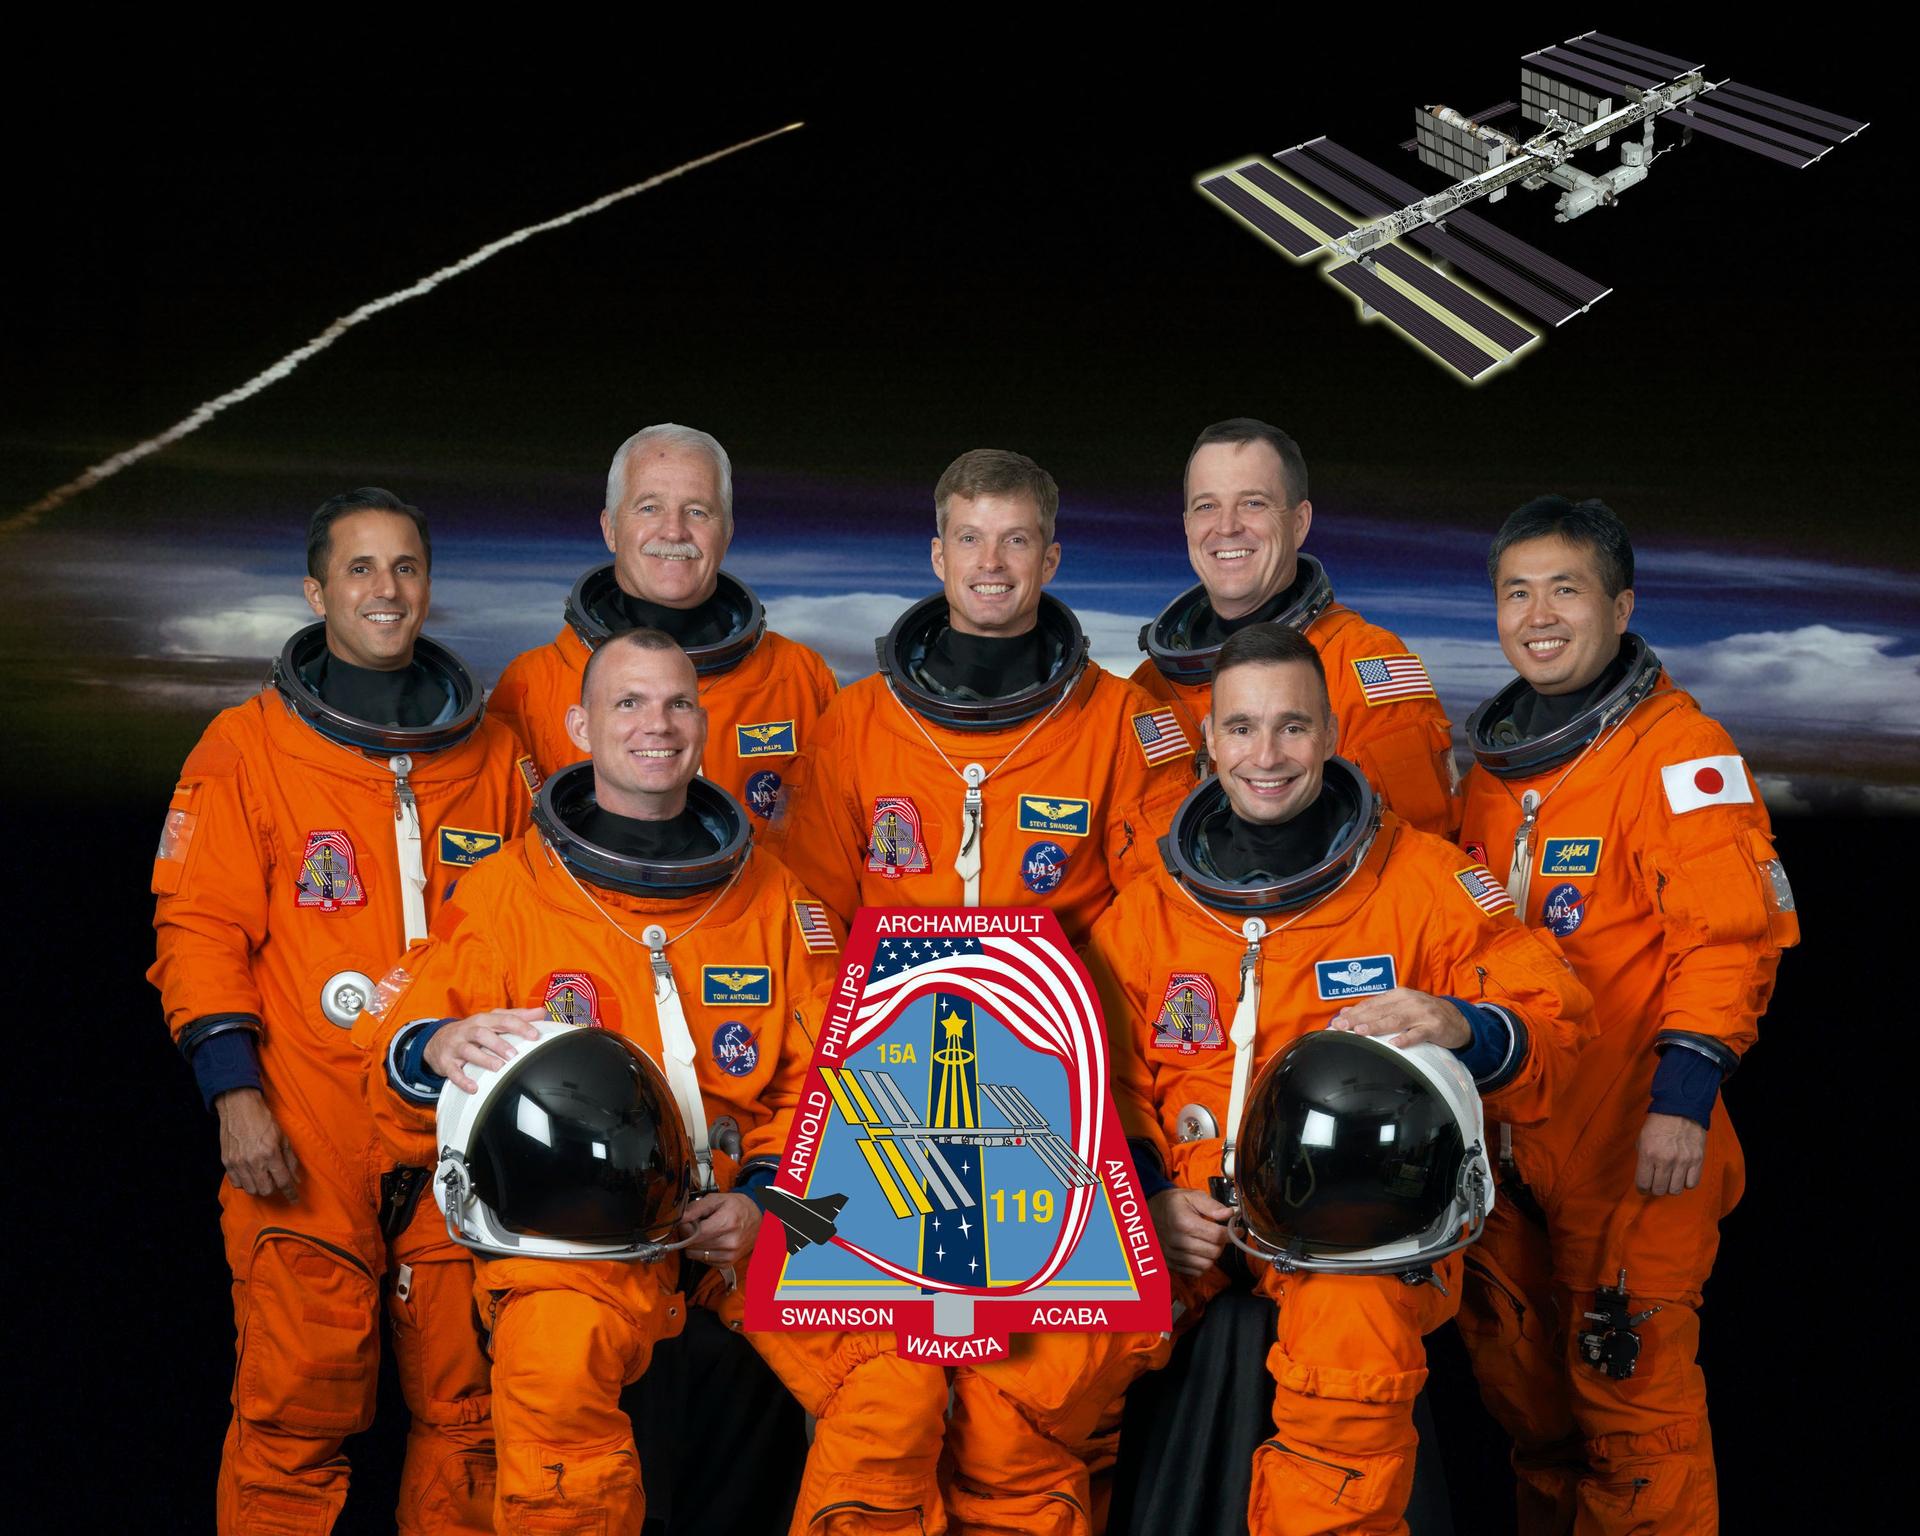 STS-119 crew in their orange flight suits